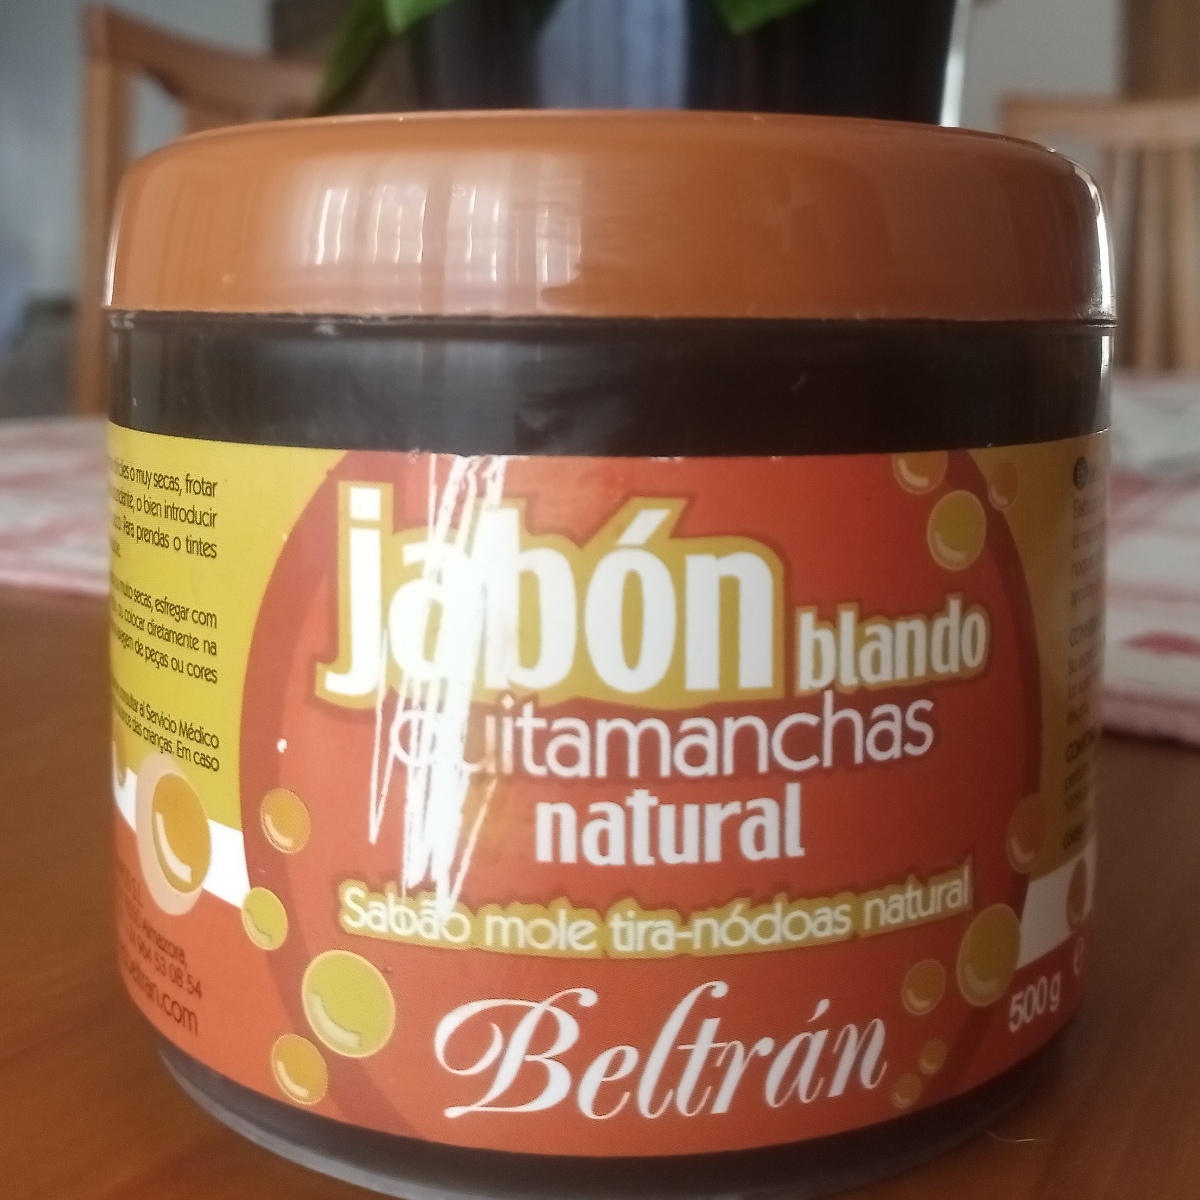 Jabón Blando Beltrán